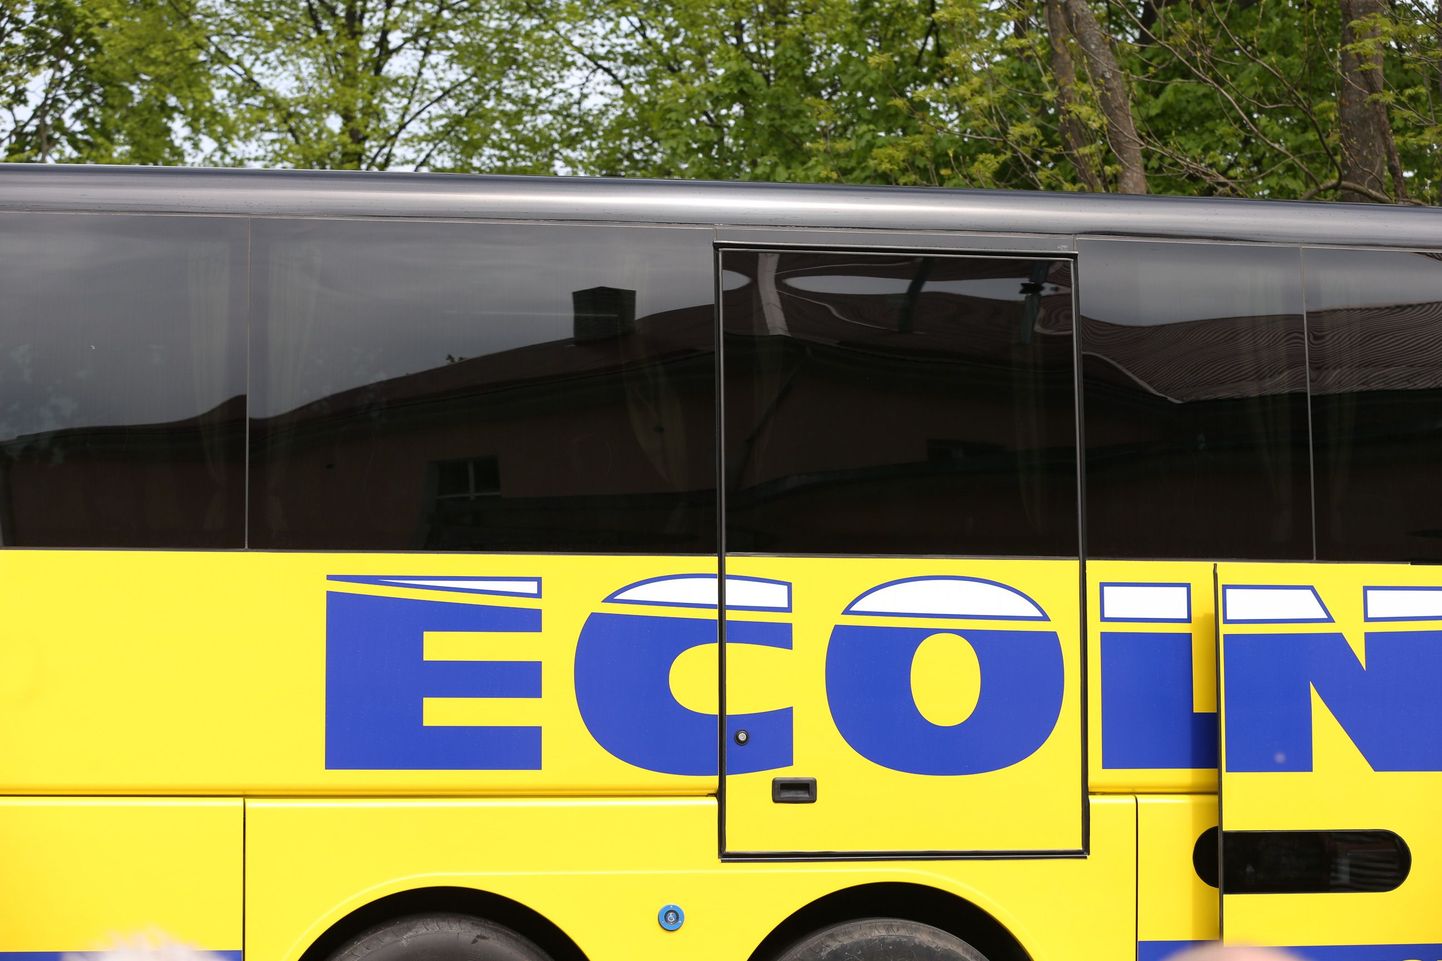 Ecolinesi buss.